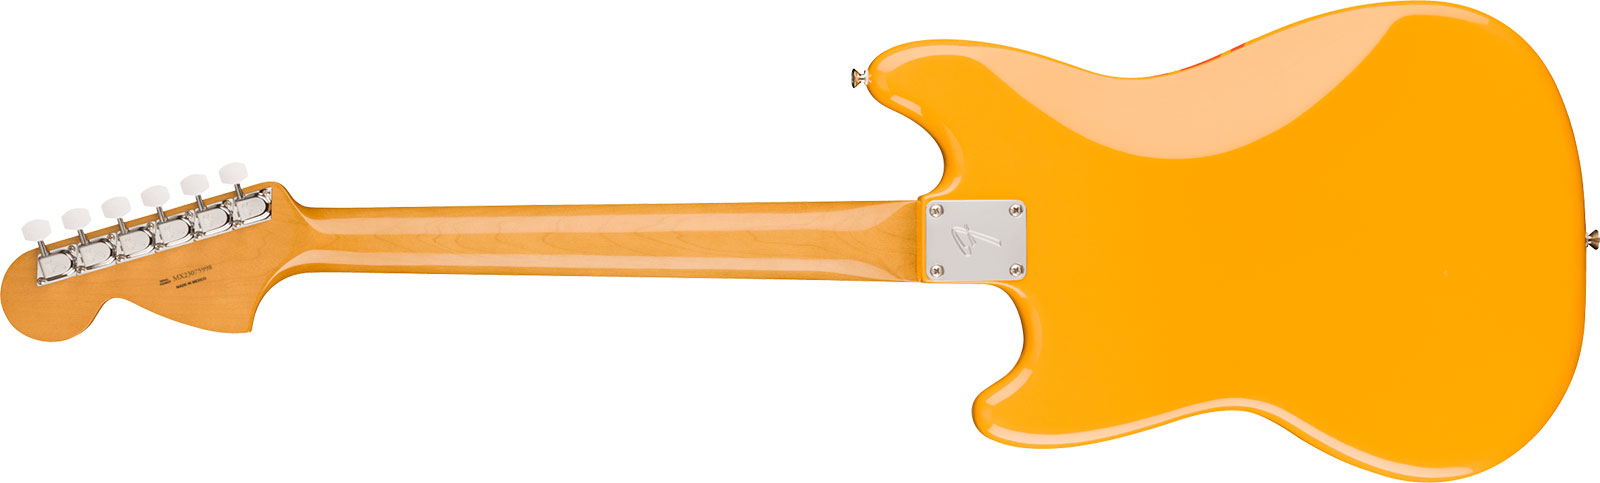 Fender Mustang 70s Competition Vintera 2 Mex 2s Trem Rw - Competition Orange - Retro-rock elektrische gitaar - Variation 1